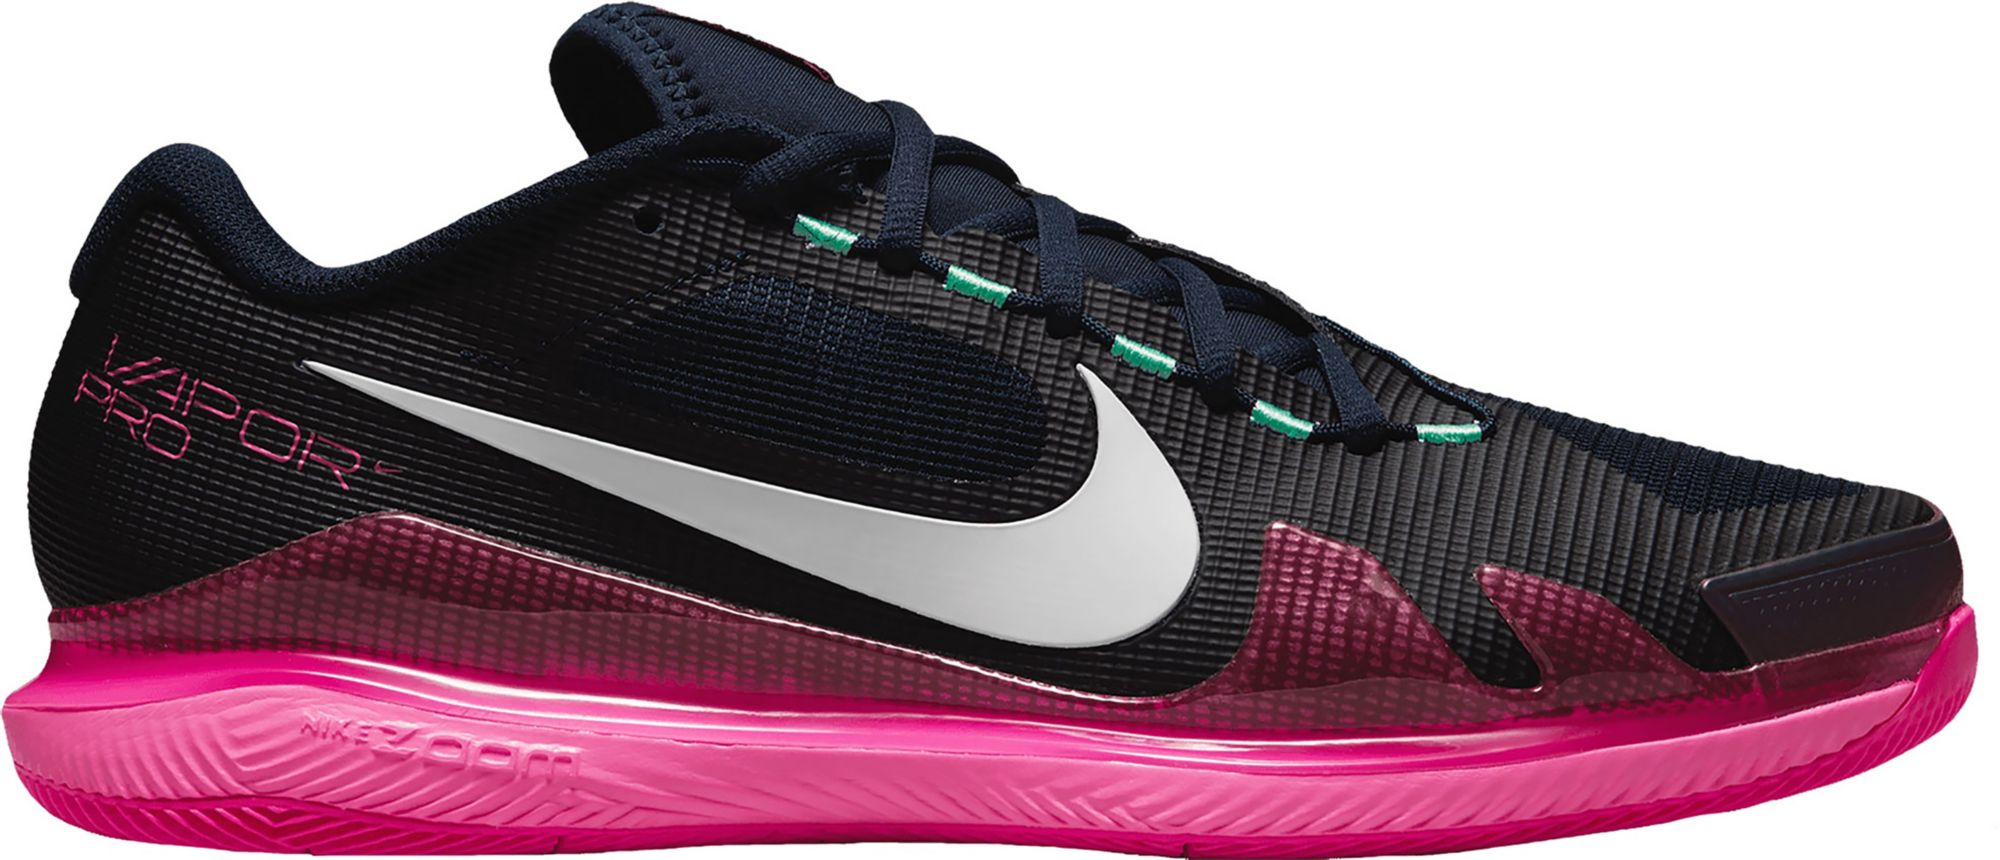 Nikecourt Men's Air Zoom Vapor Pro Hard Court Tennis Shoes, Size 10.5, Dark Obsidian/White